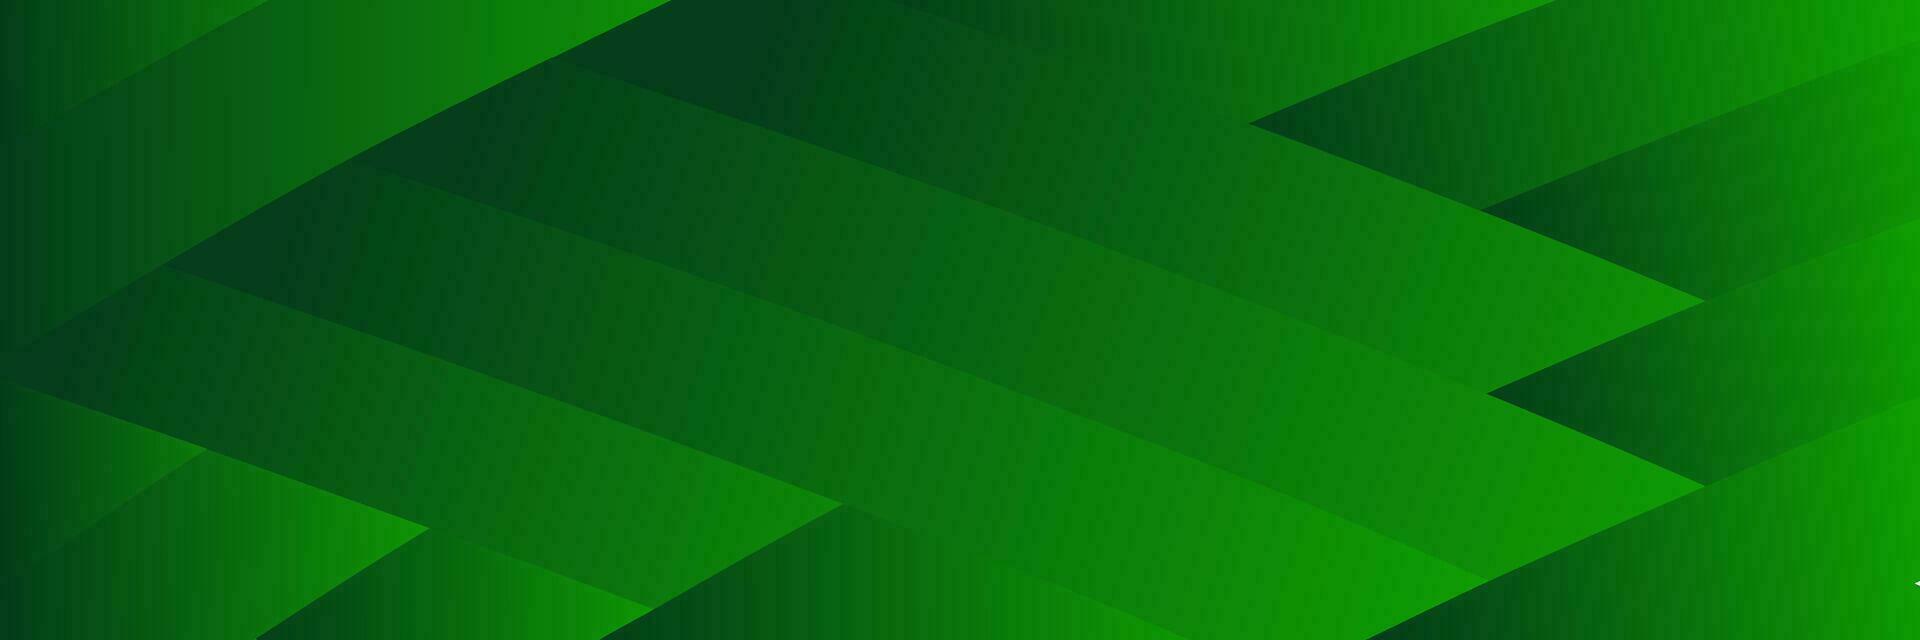 abstract elegant groen helling achtergrond vector